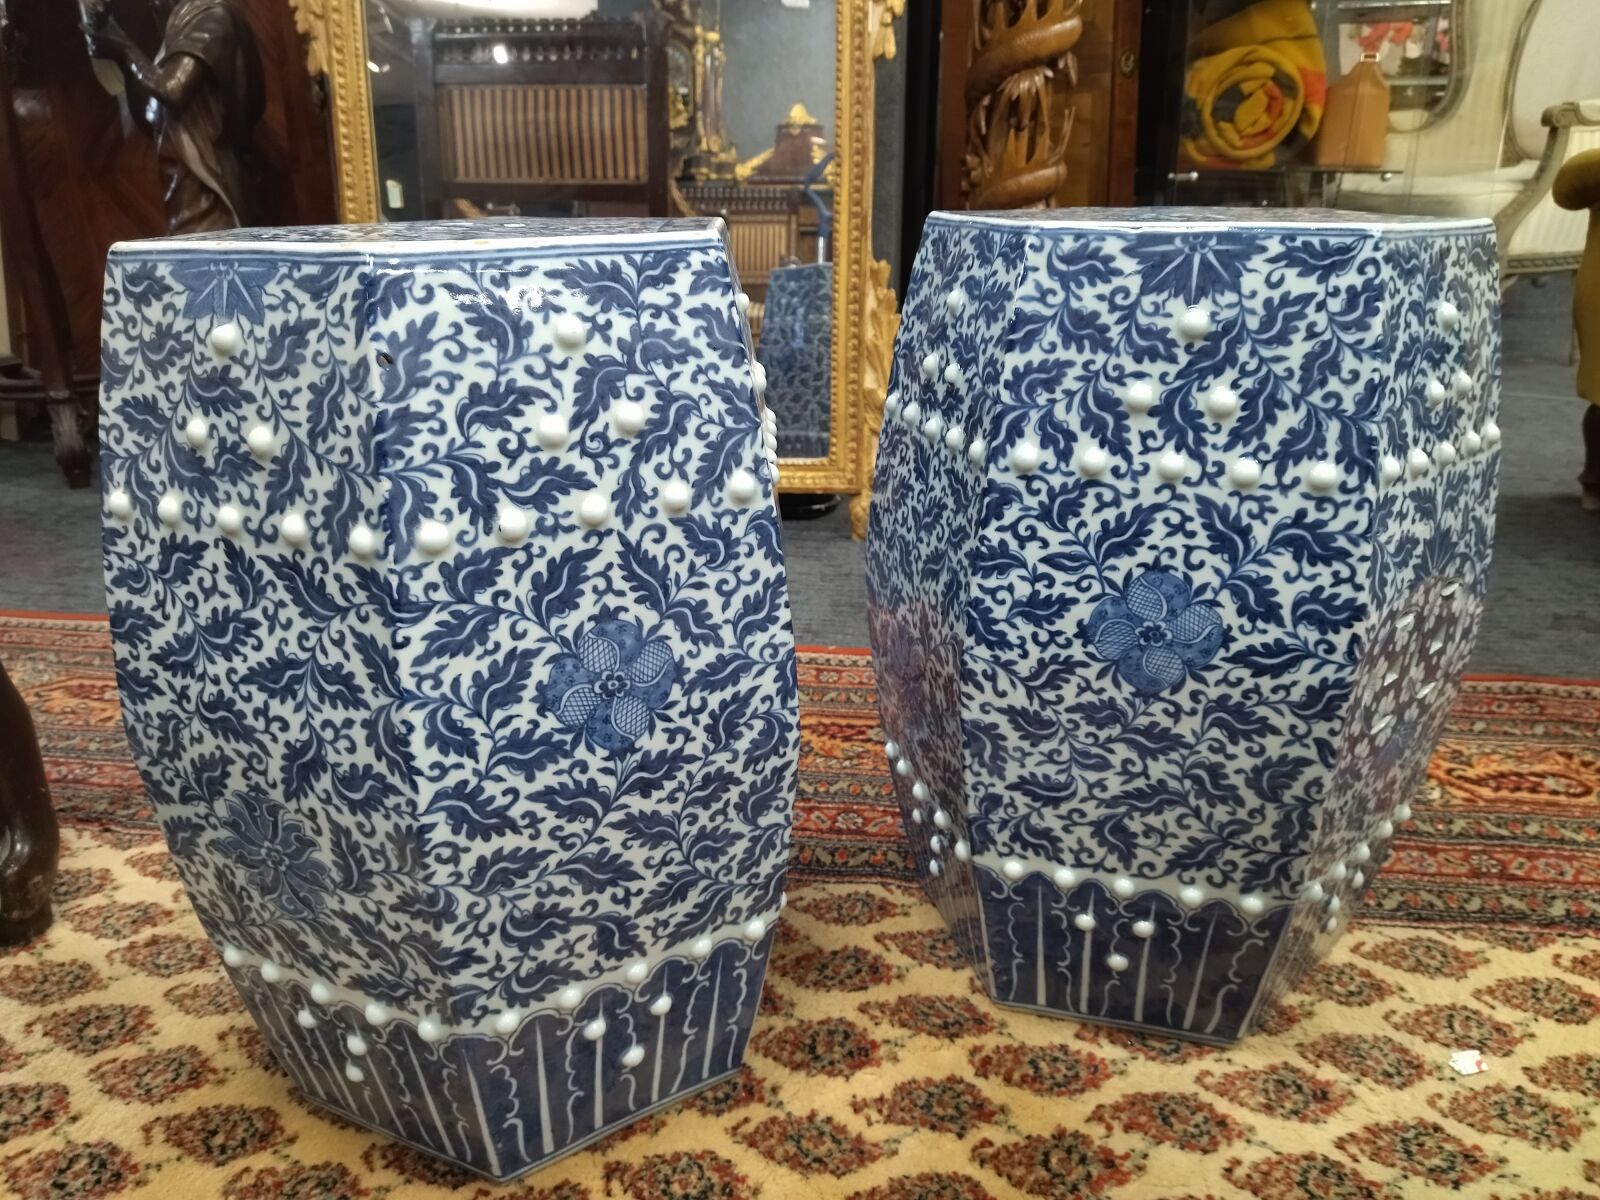 Null 中国：一对六角形瓷胎珐琅彩凳，釉下饰有蓝色单色荷花叶片，部分为镂空。尺寸：49 x 35 x 35 厘米。小碎片和珐琅碎片